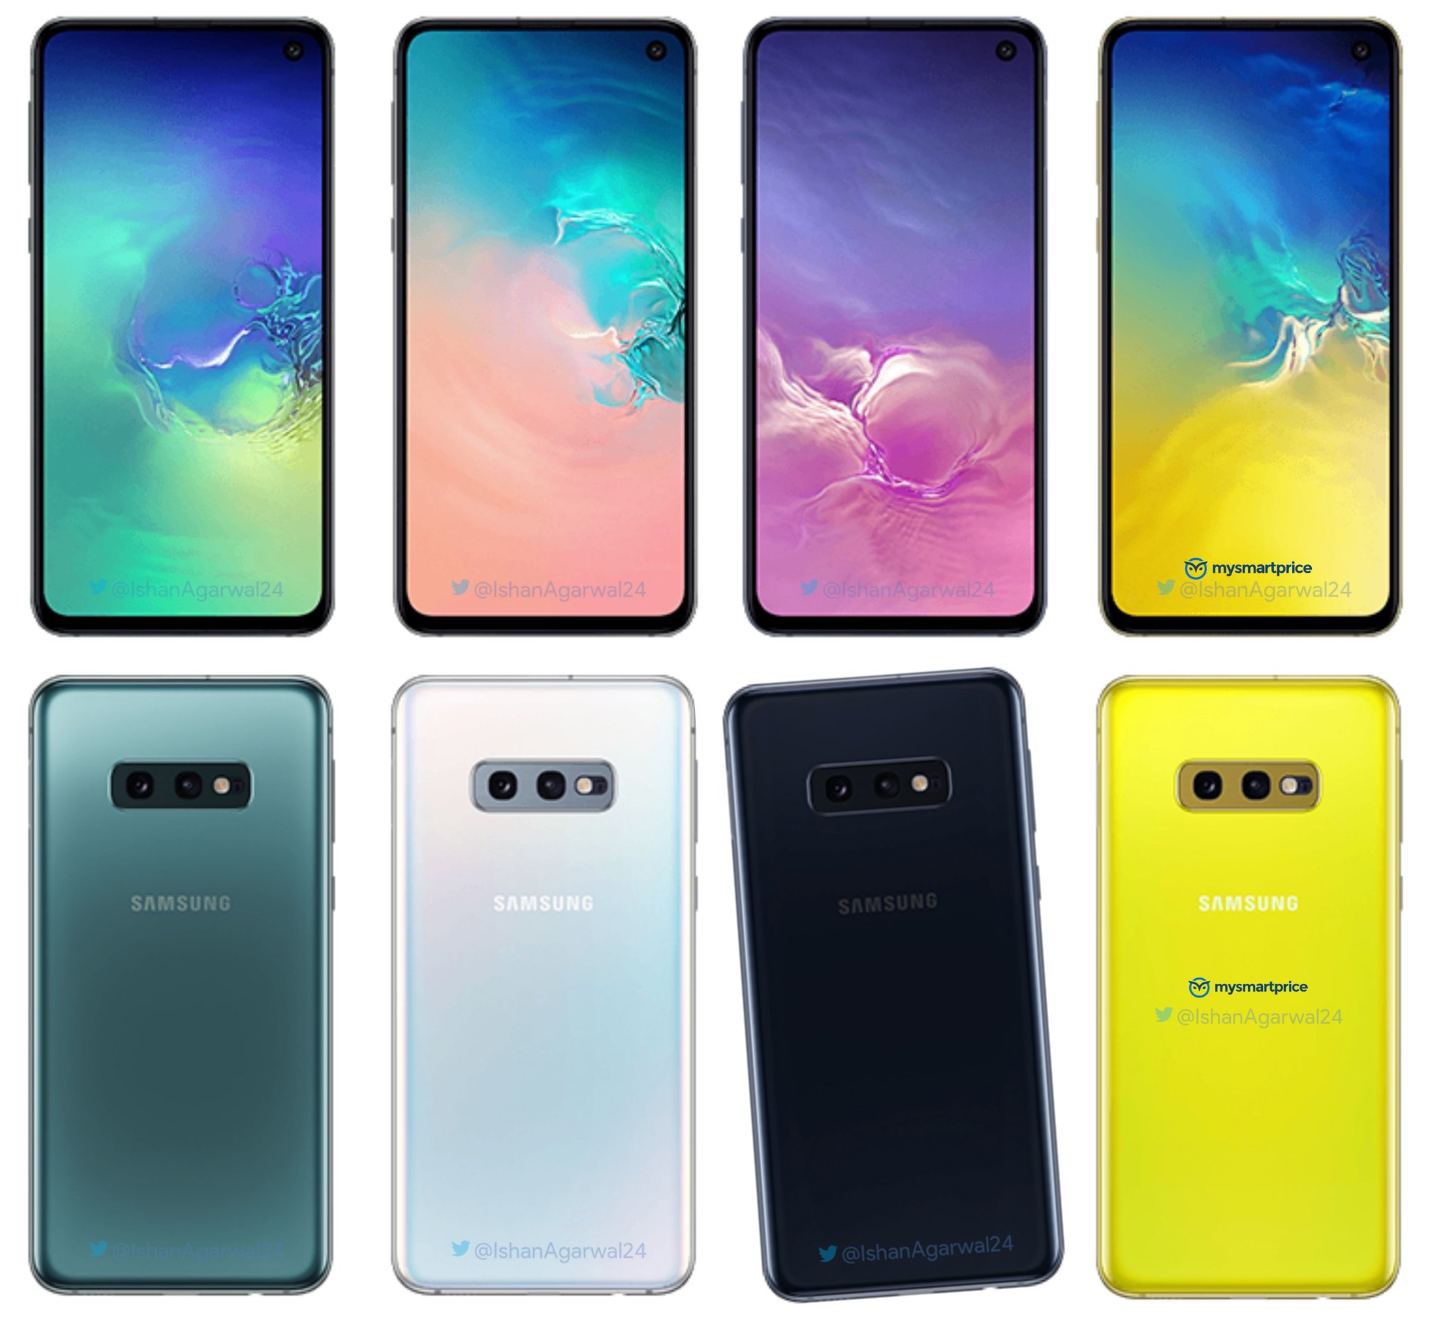 Samsung s10 год. Samsung Galaxy s10e. Самсунг галакси с 10e. Samsung Galaxy s10 s10e. Samsung s10 Pro.